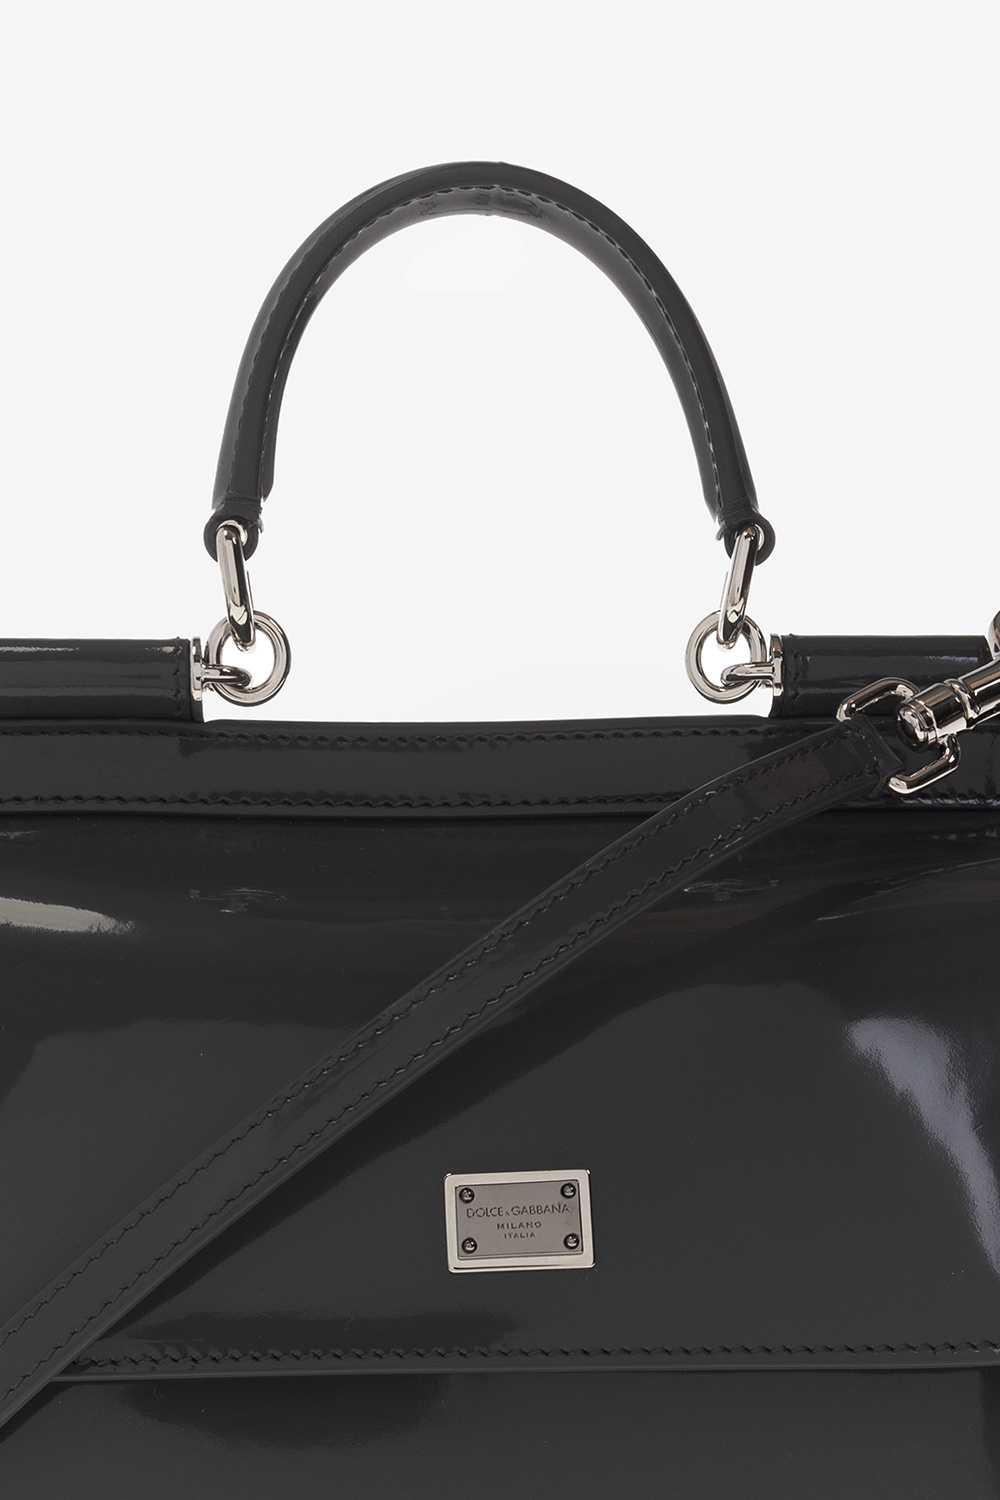 Grey 'Sicily Small' shoulder bag Dolce & Gabbana - Vitkac GB